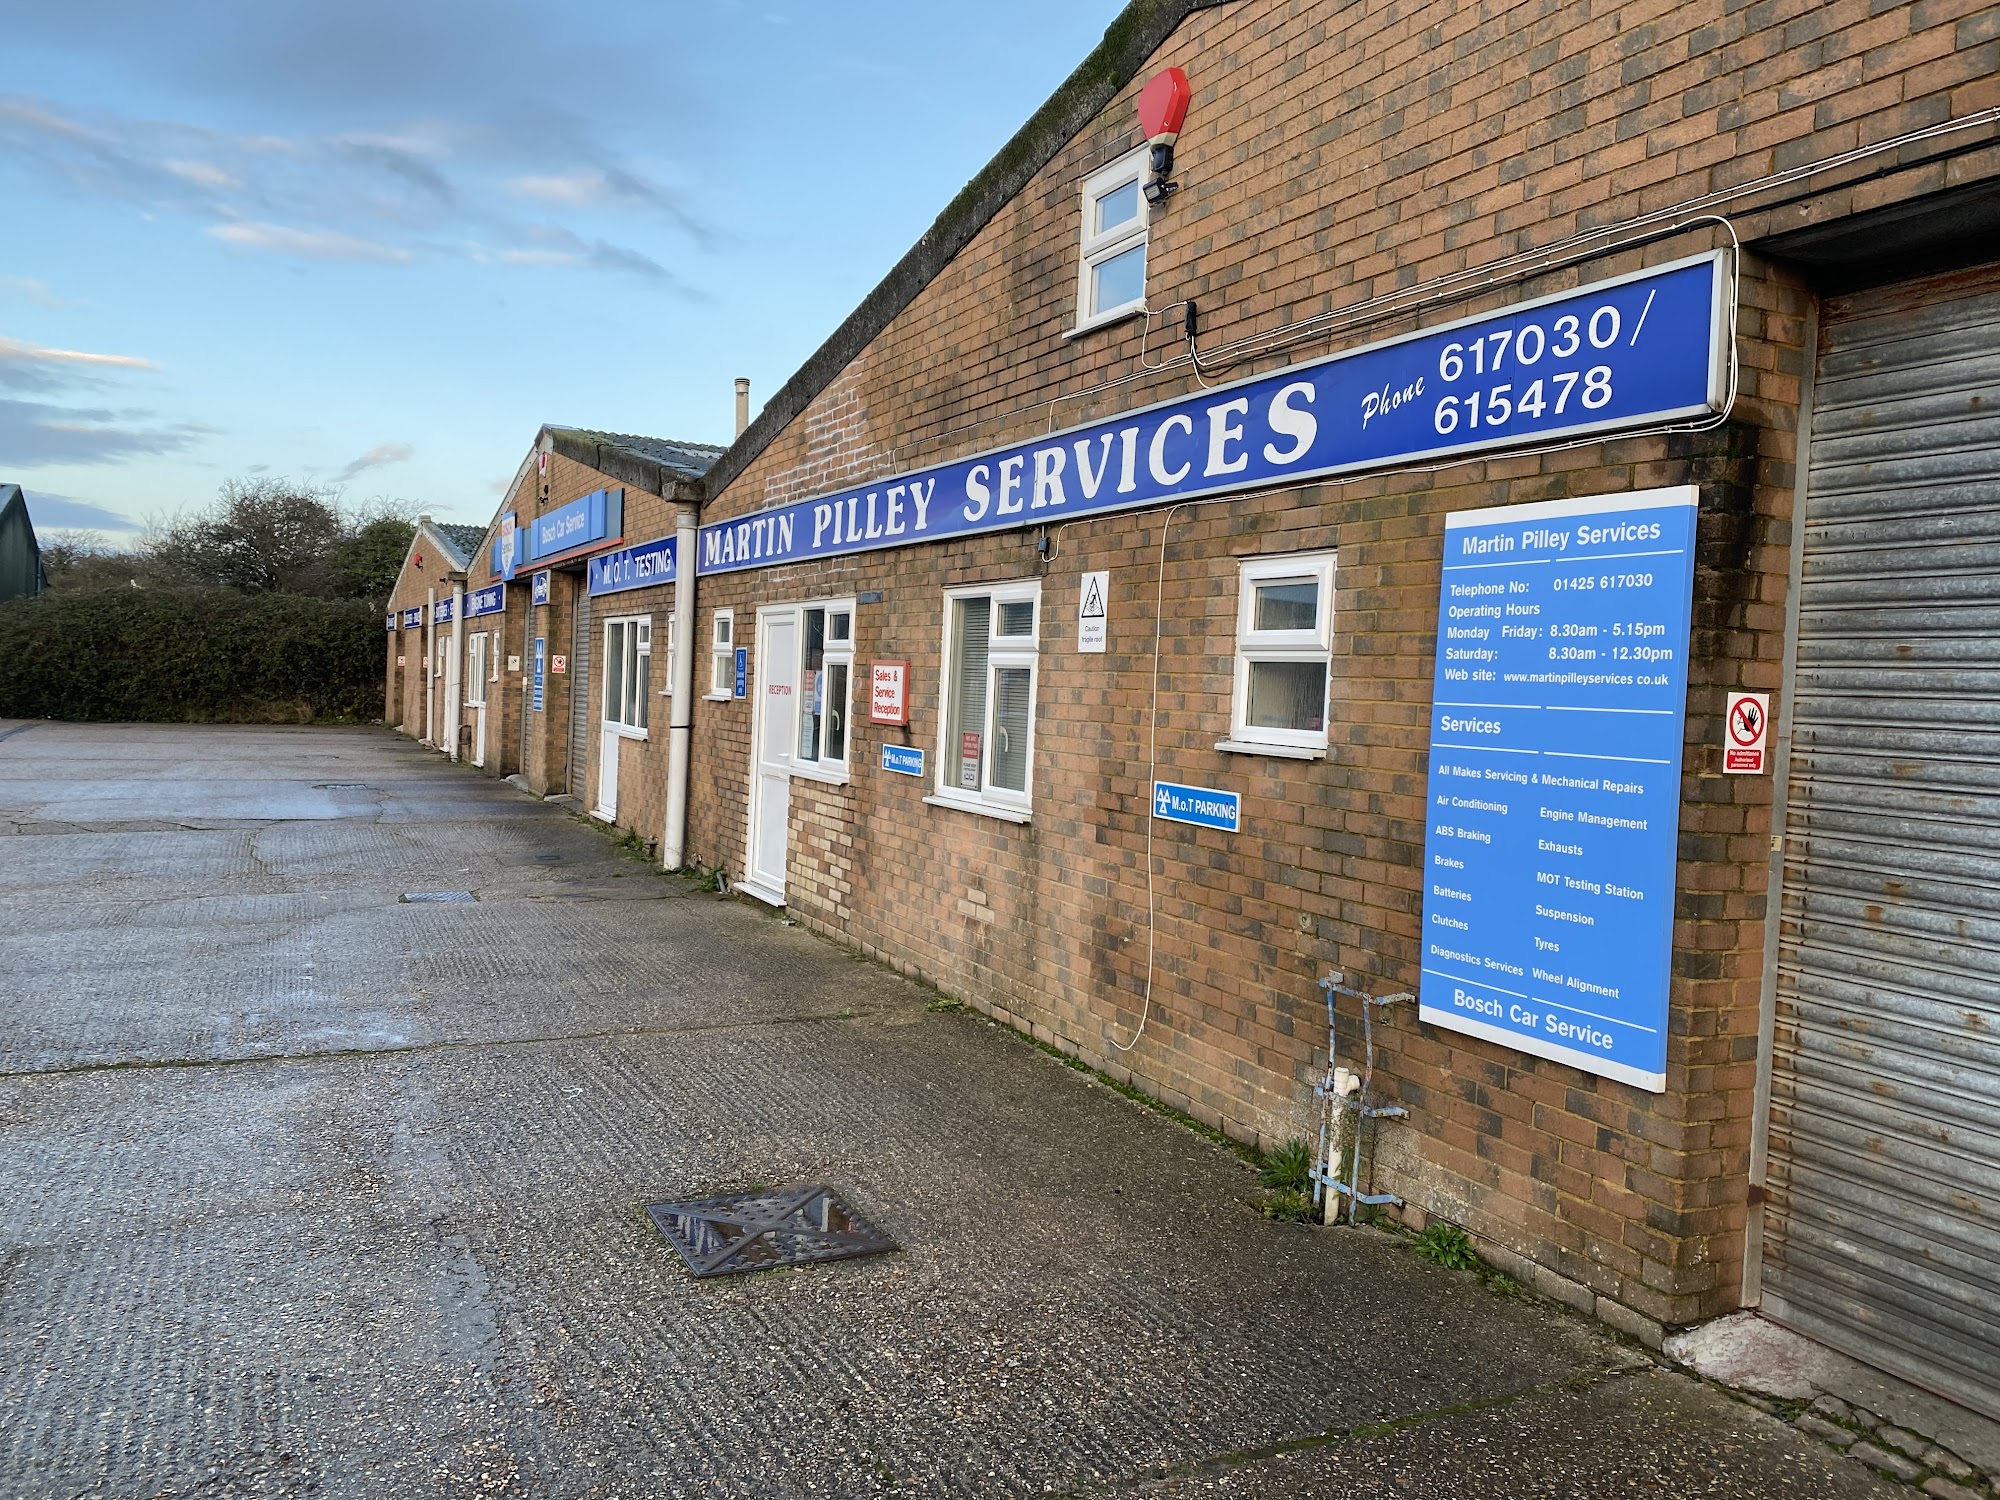 Martin Pilley Services - MPS Car Service Centre